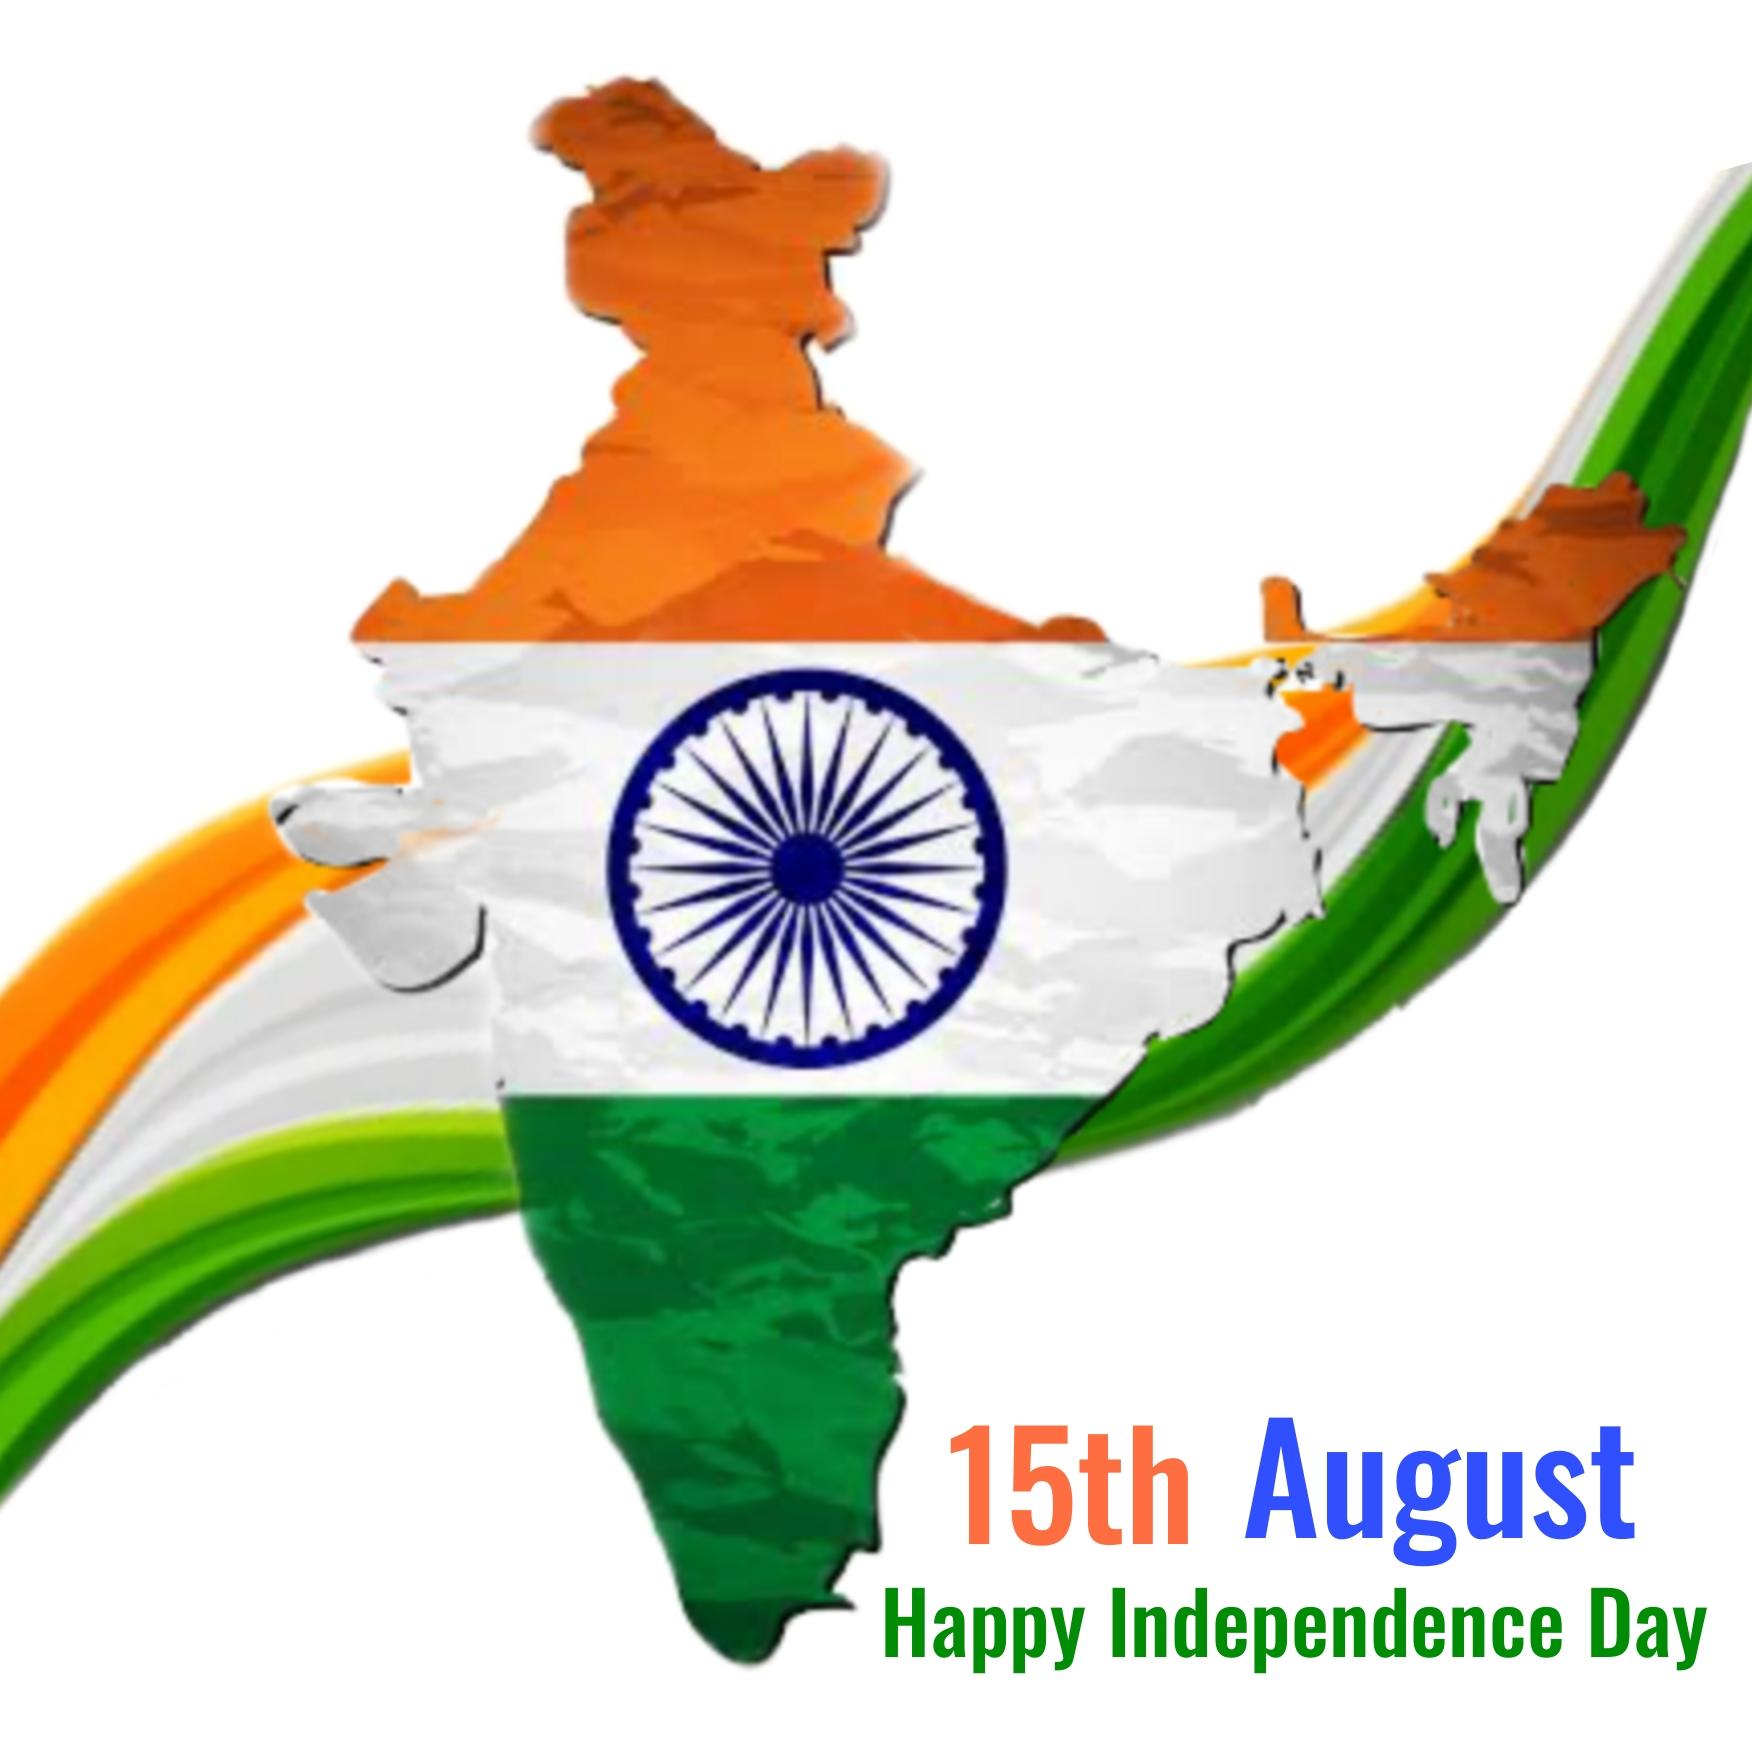 https://img.punjabijagran.com/punjabi/Happy Independence Day : ਆਓ! ਆਪਣੀ ਮਾਤਭੂਮੀ ਪ੍ਰਤੀ ਵਫ਼ਾਦਾਰੀ, ਆਪਸੀ ਏਕਤਾ ਤੇ ਅਖੰਡਤਾ ਨੂੰ ਕਾਇਮ ਰੱਖਣ ਦਾ ਹਲਫ਼ ਲਈਏ